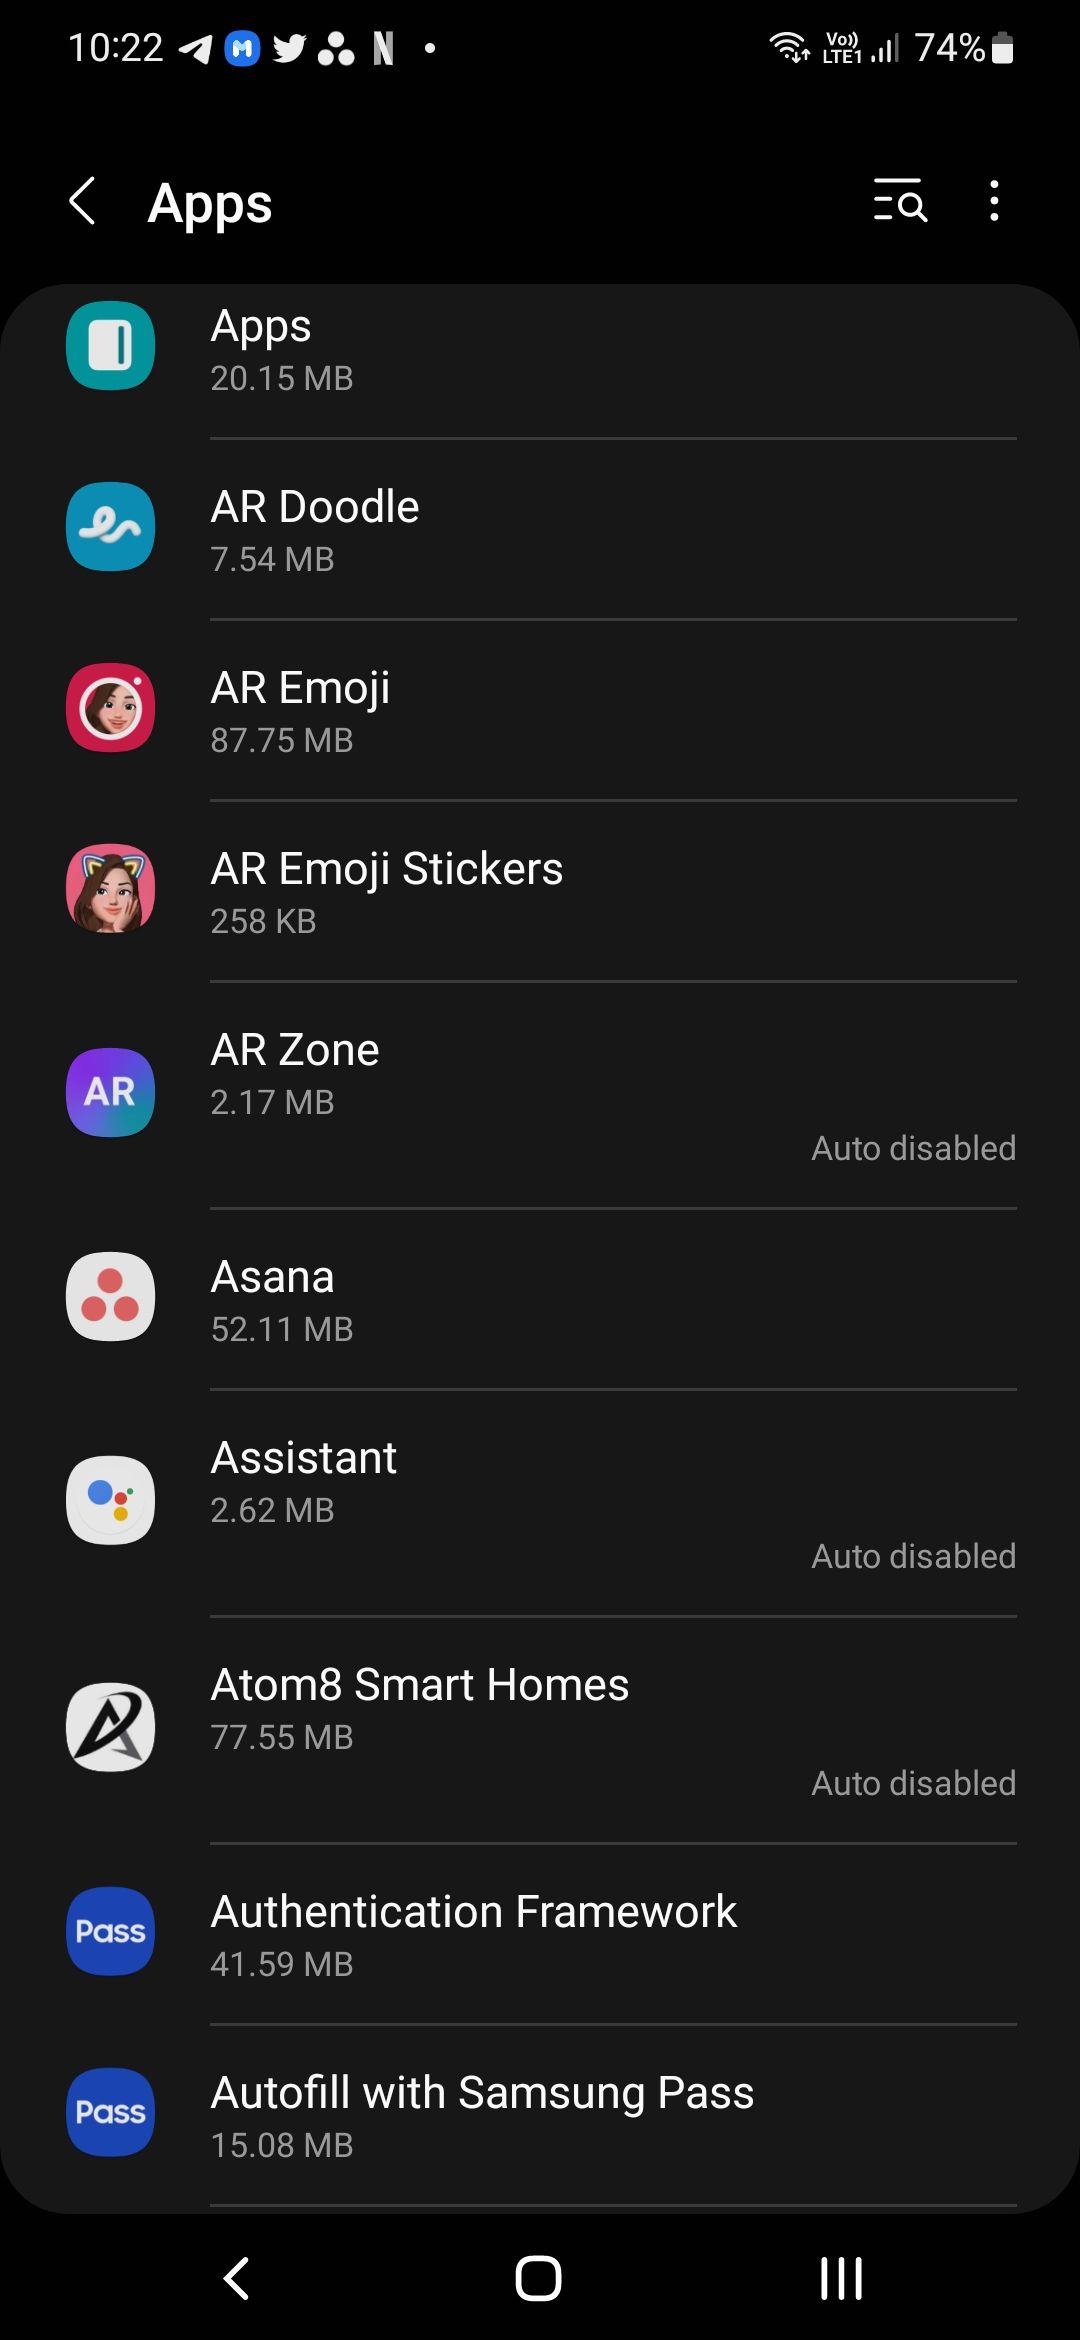 Screenshot shows Samsung Phone app menu page from settings.